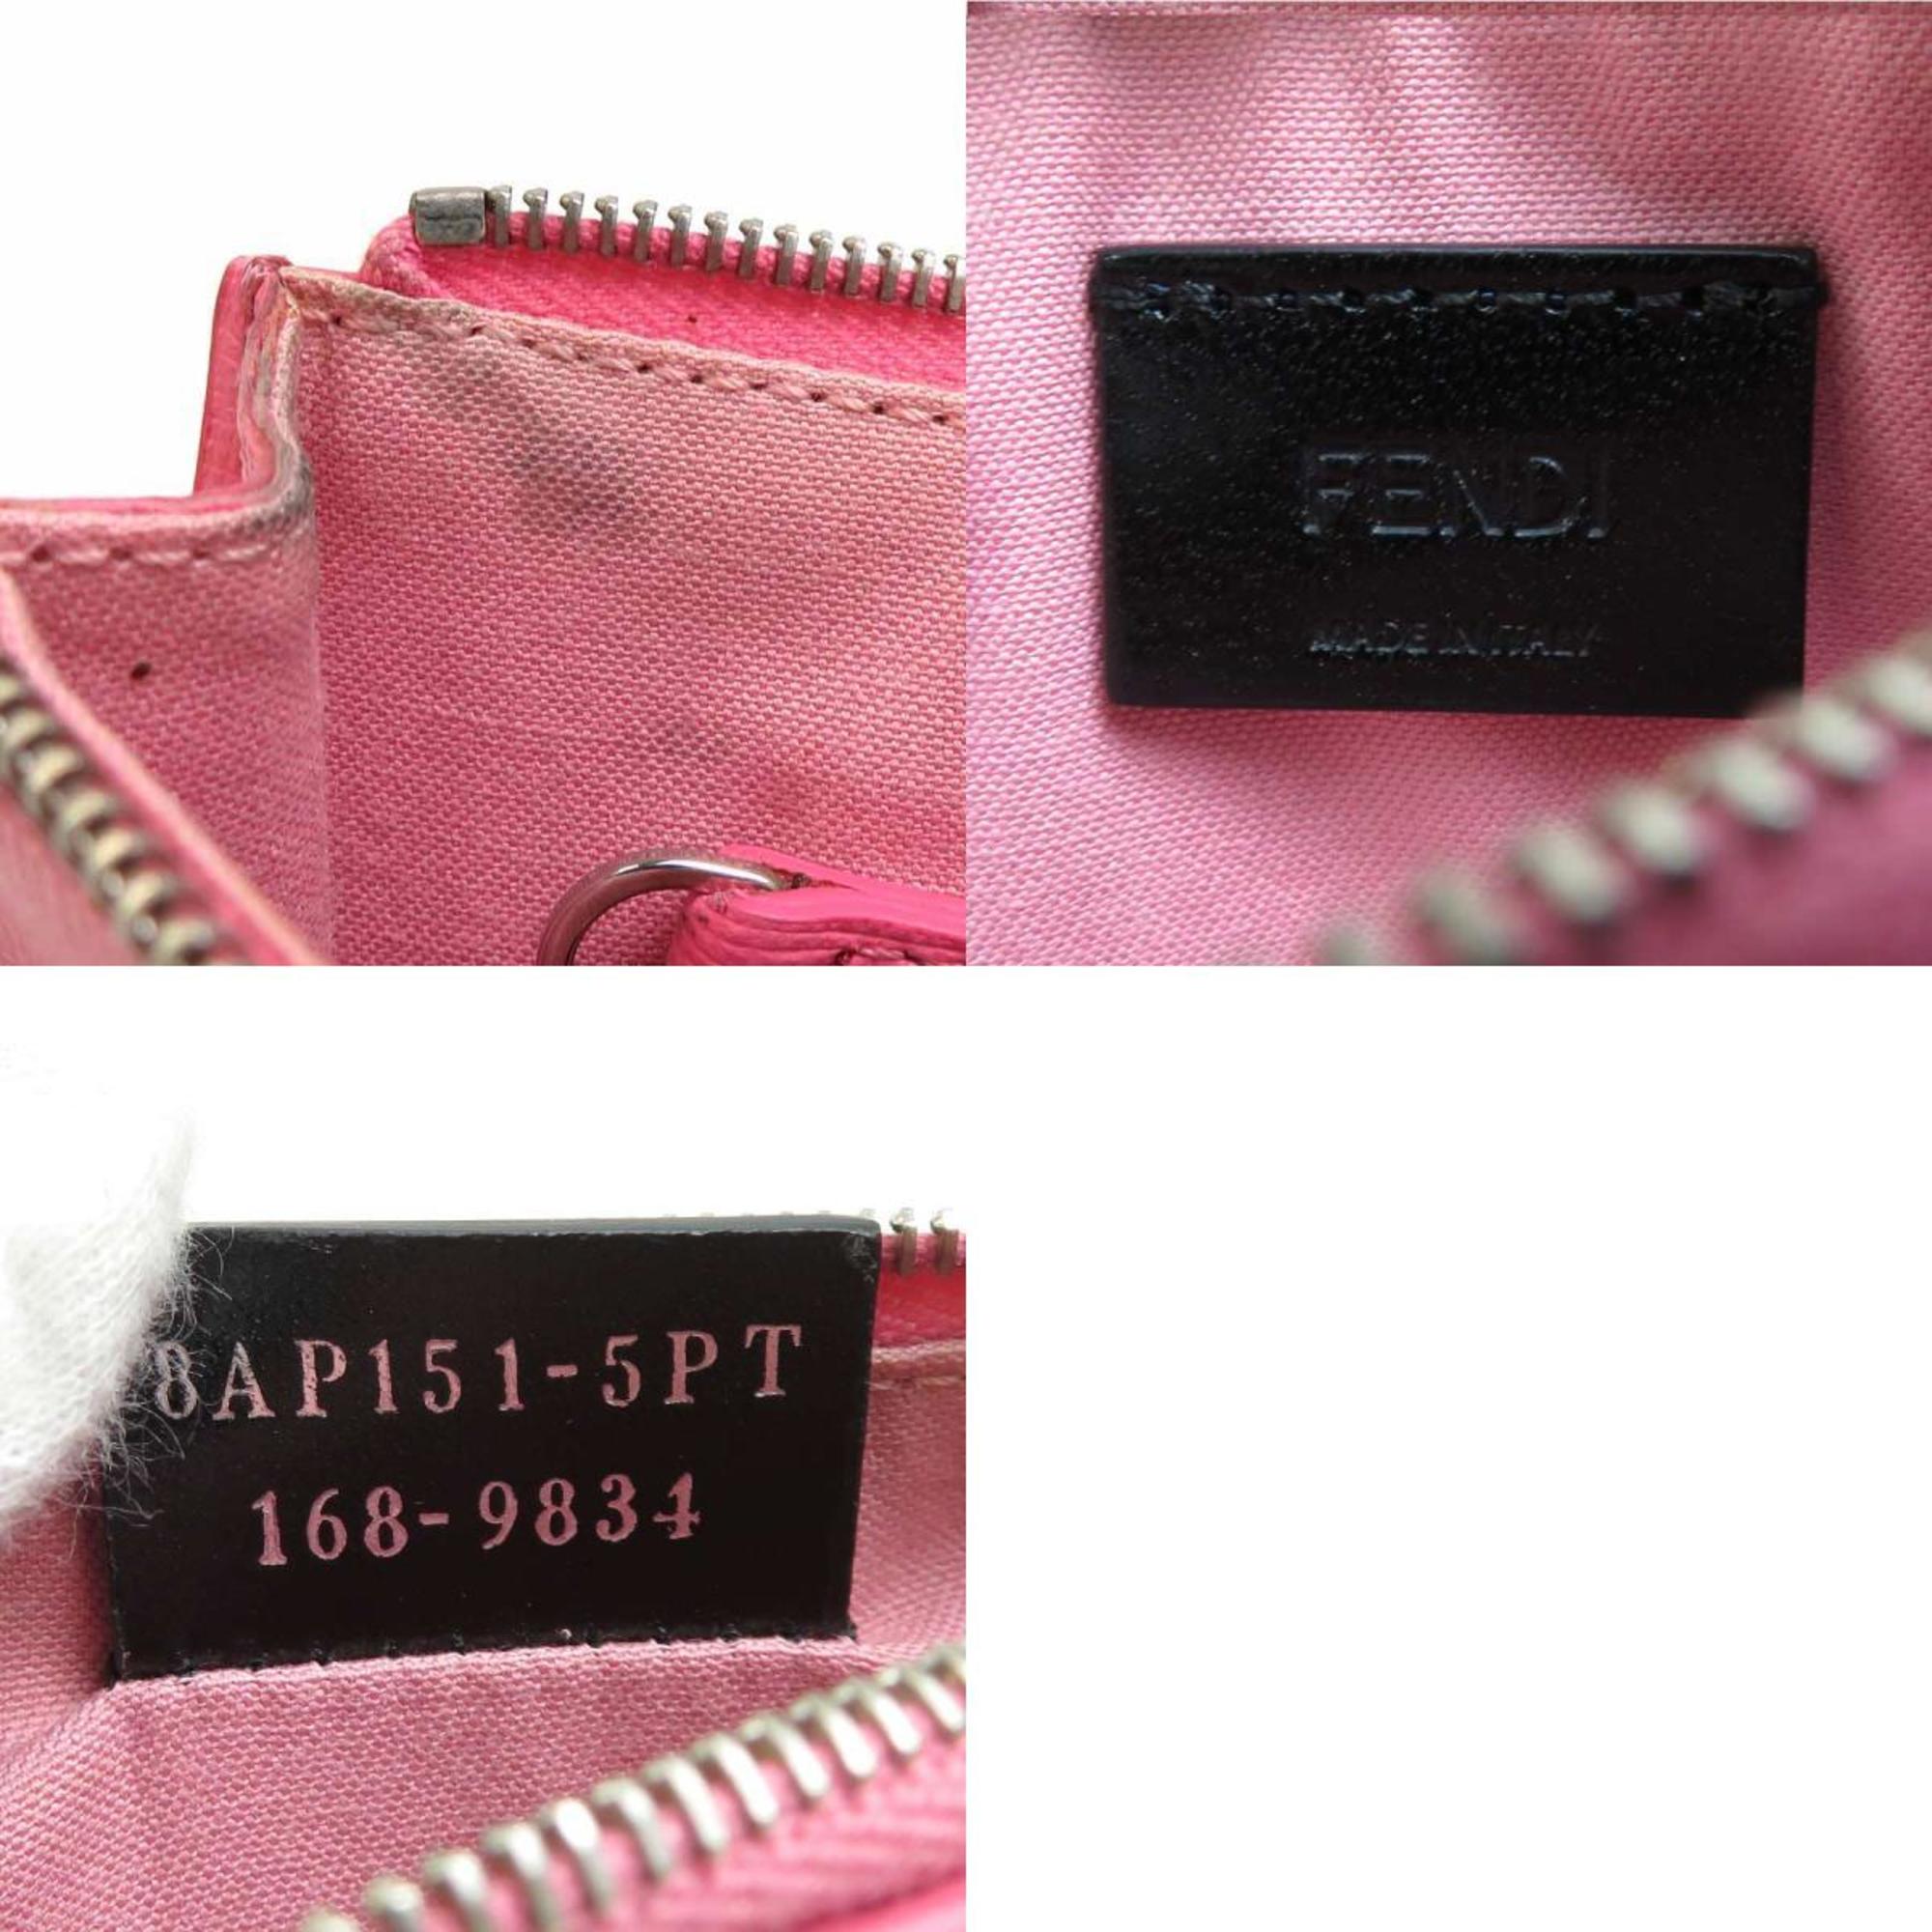 Fendi FENDI Coin Case Key Bugs Monster Leather Pink/Black Silver Women's e55830g